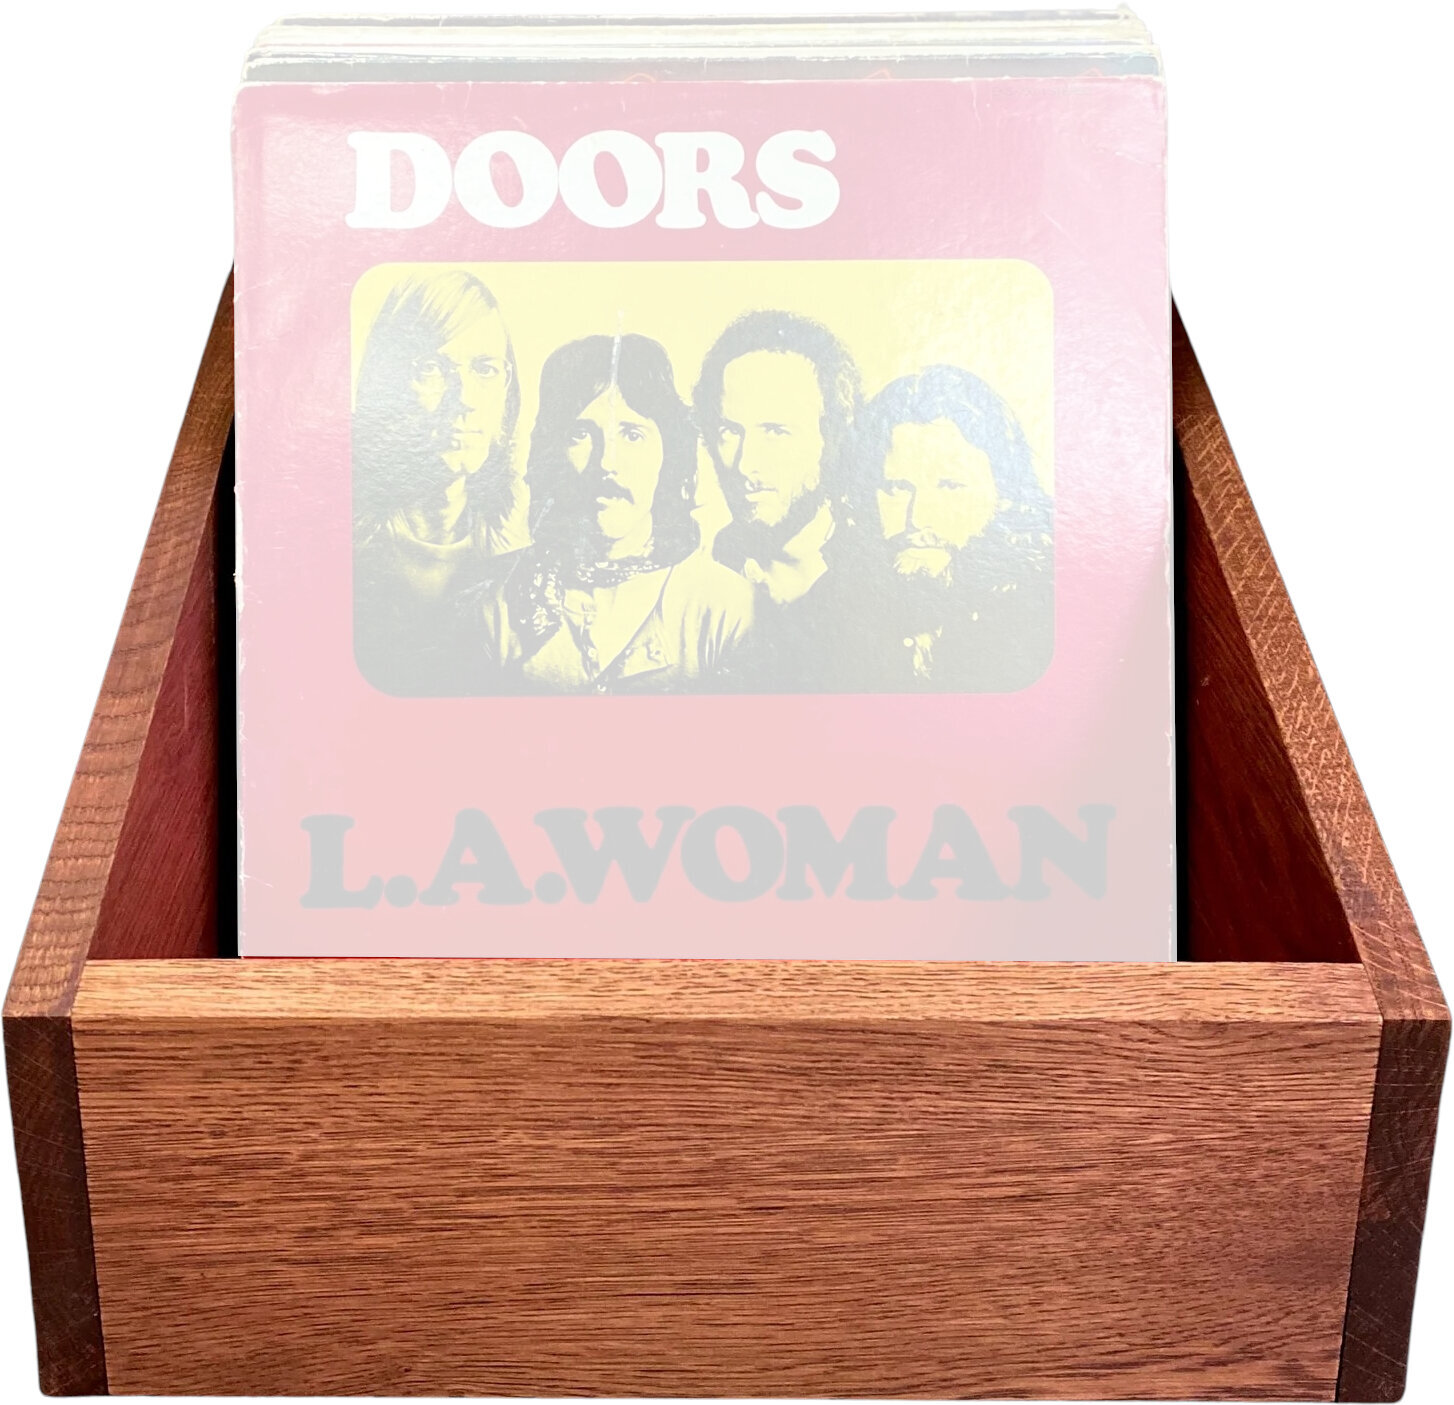 Pudełko na płyty LP Music Box Designs A Vulgar Display of Vinyl - 12 Inch Vinyl Storage Box, Whole Lotta Rosewood